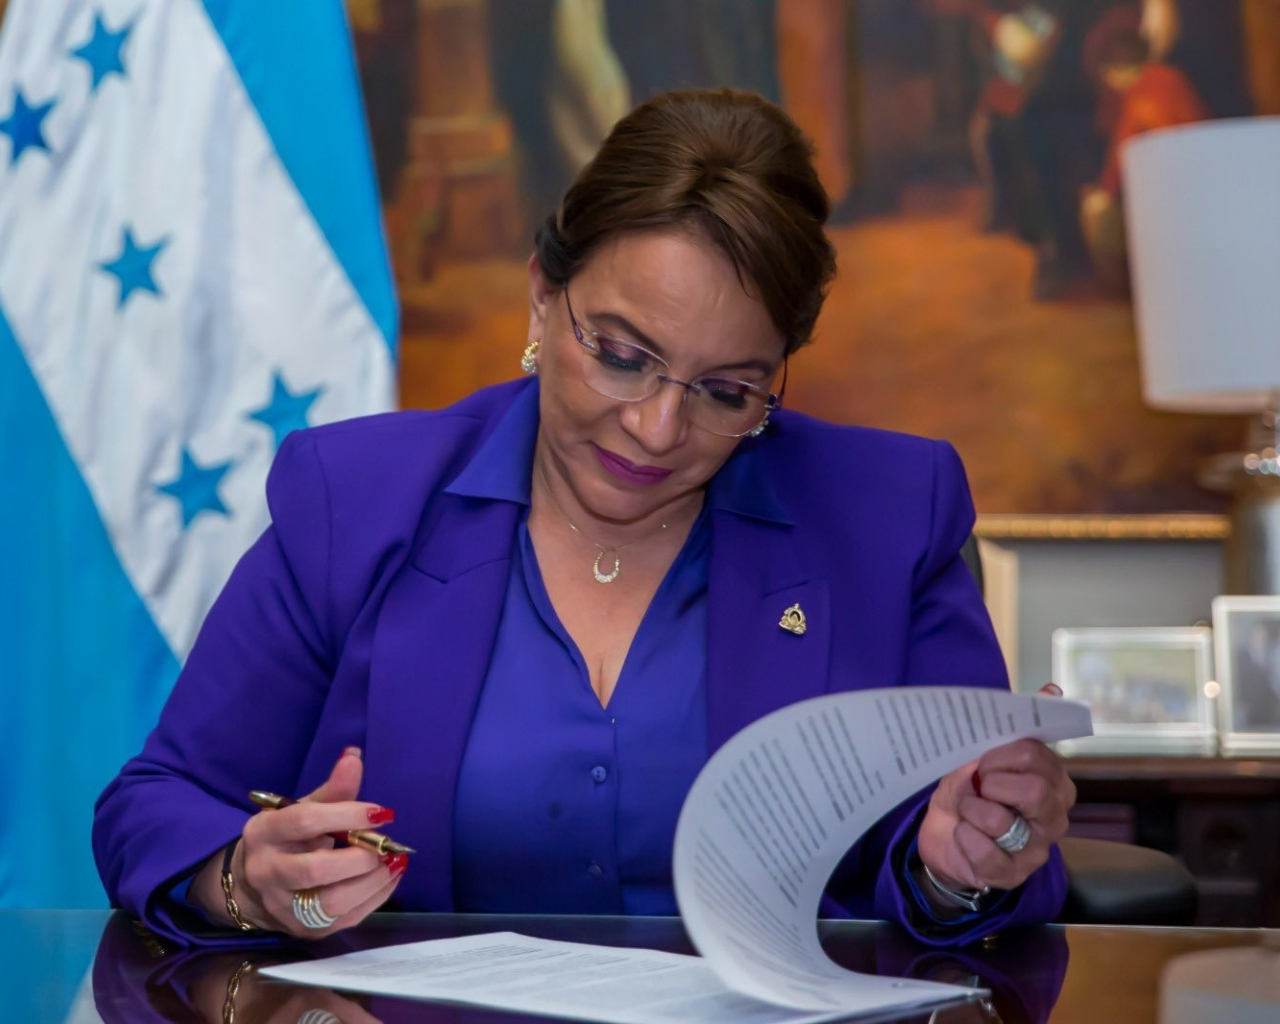 Presidenta de Honduras